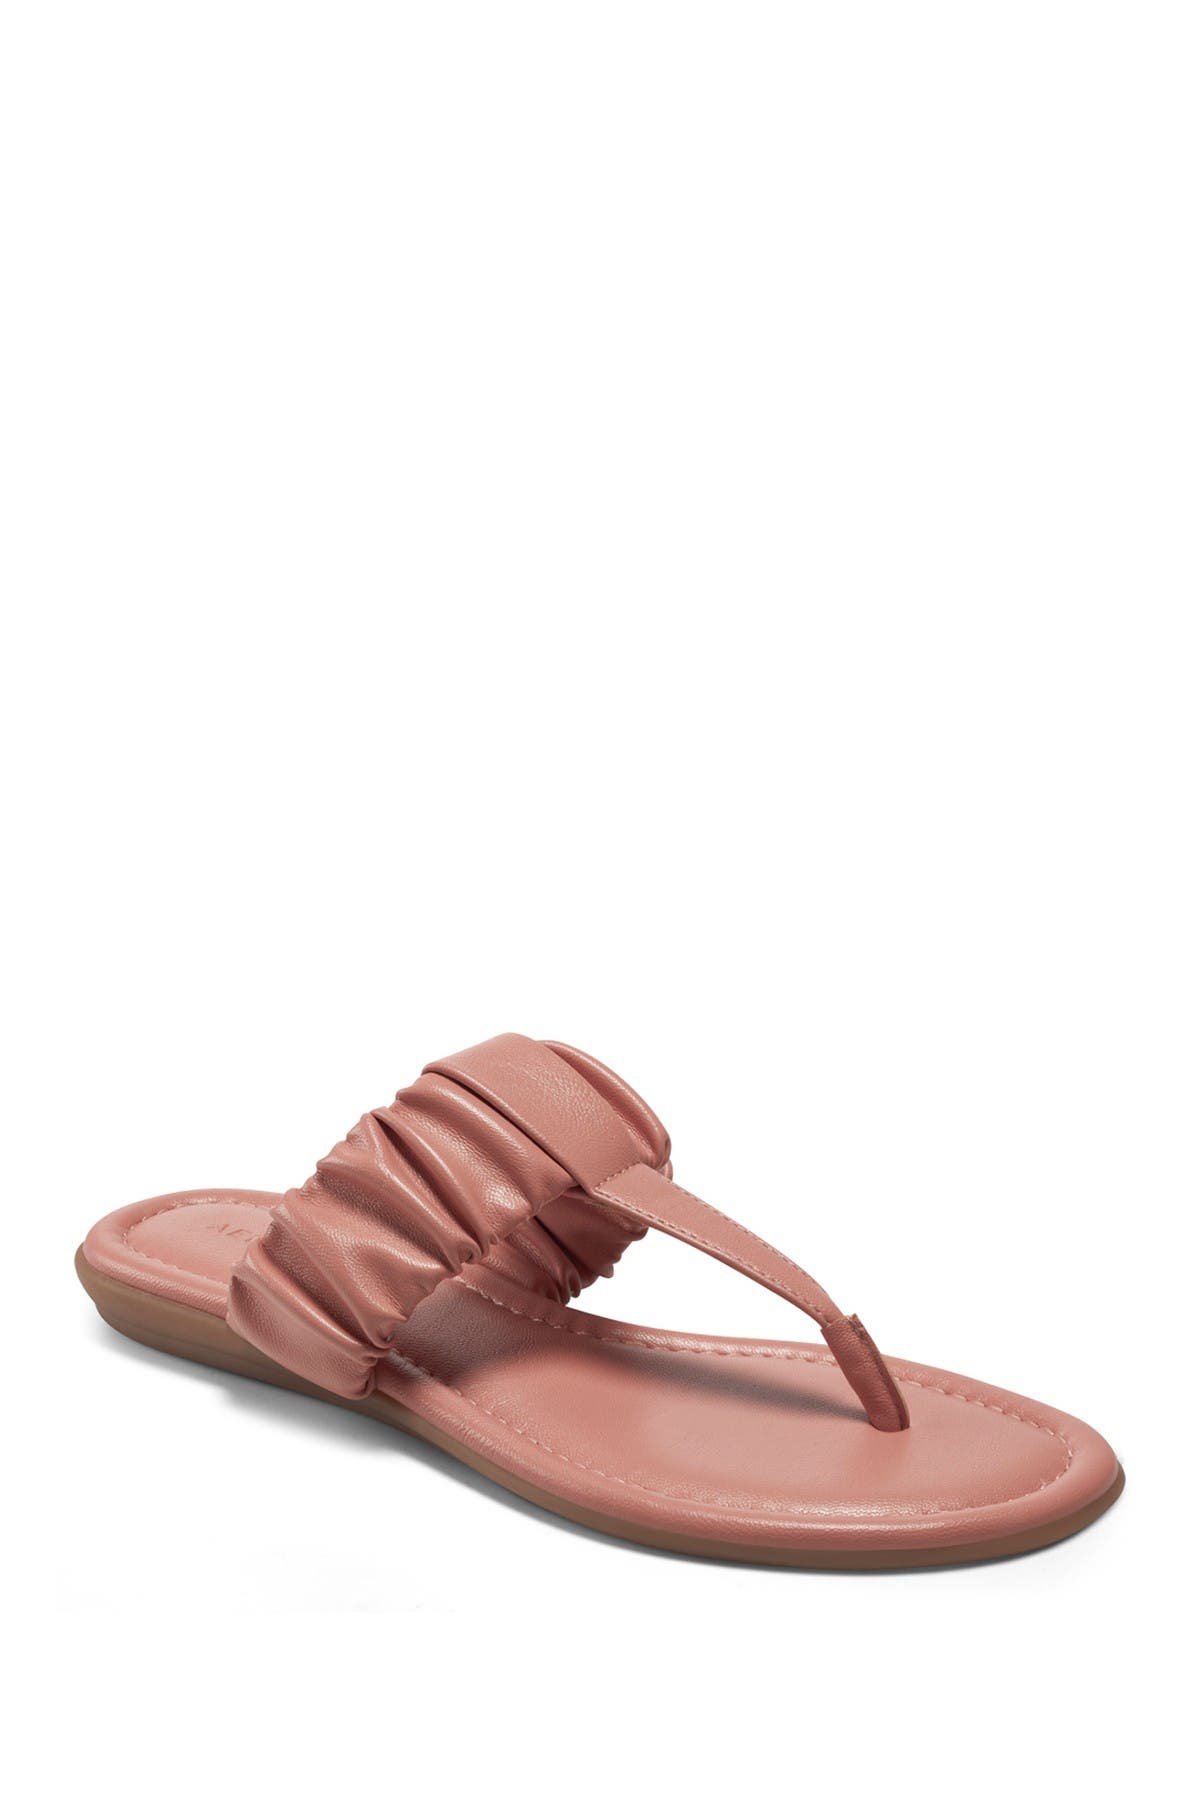 Aerosoles Cady T-strap Sandal In Medium Pink6